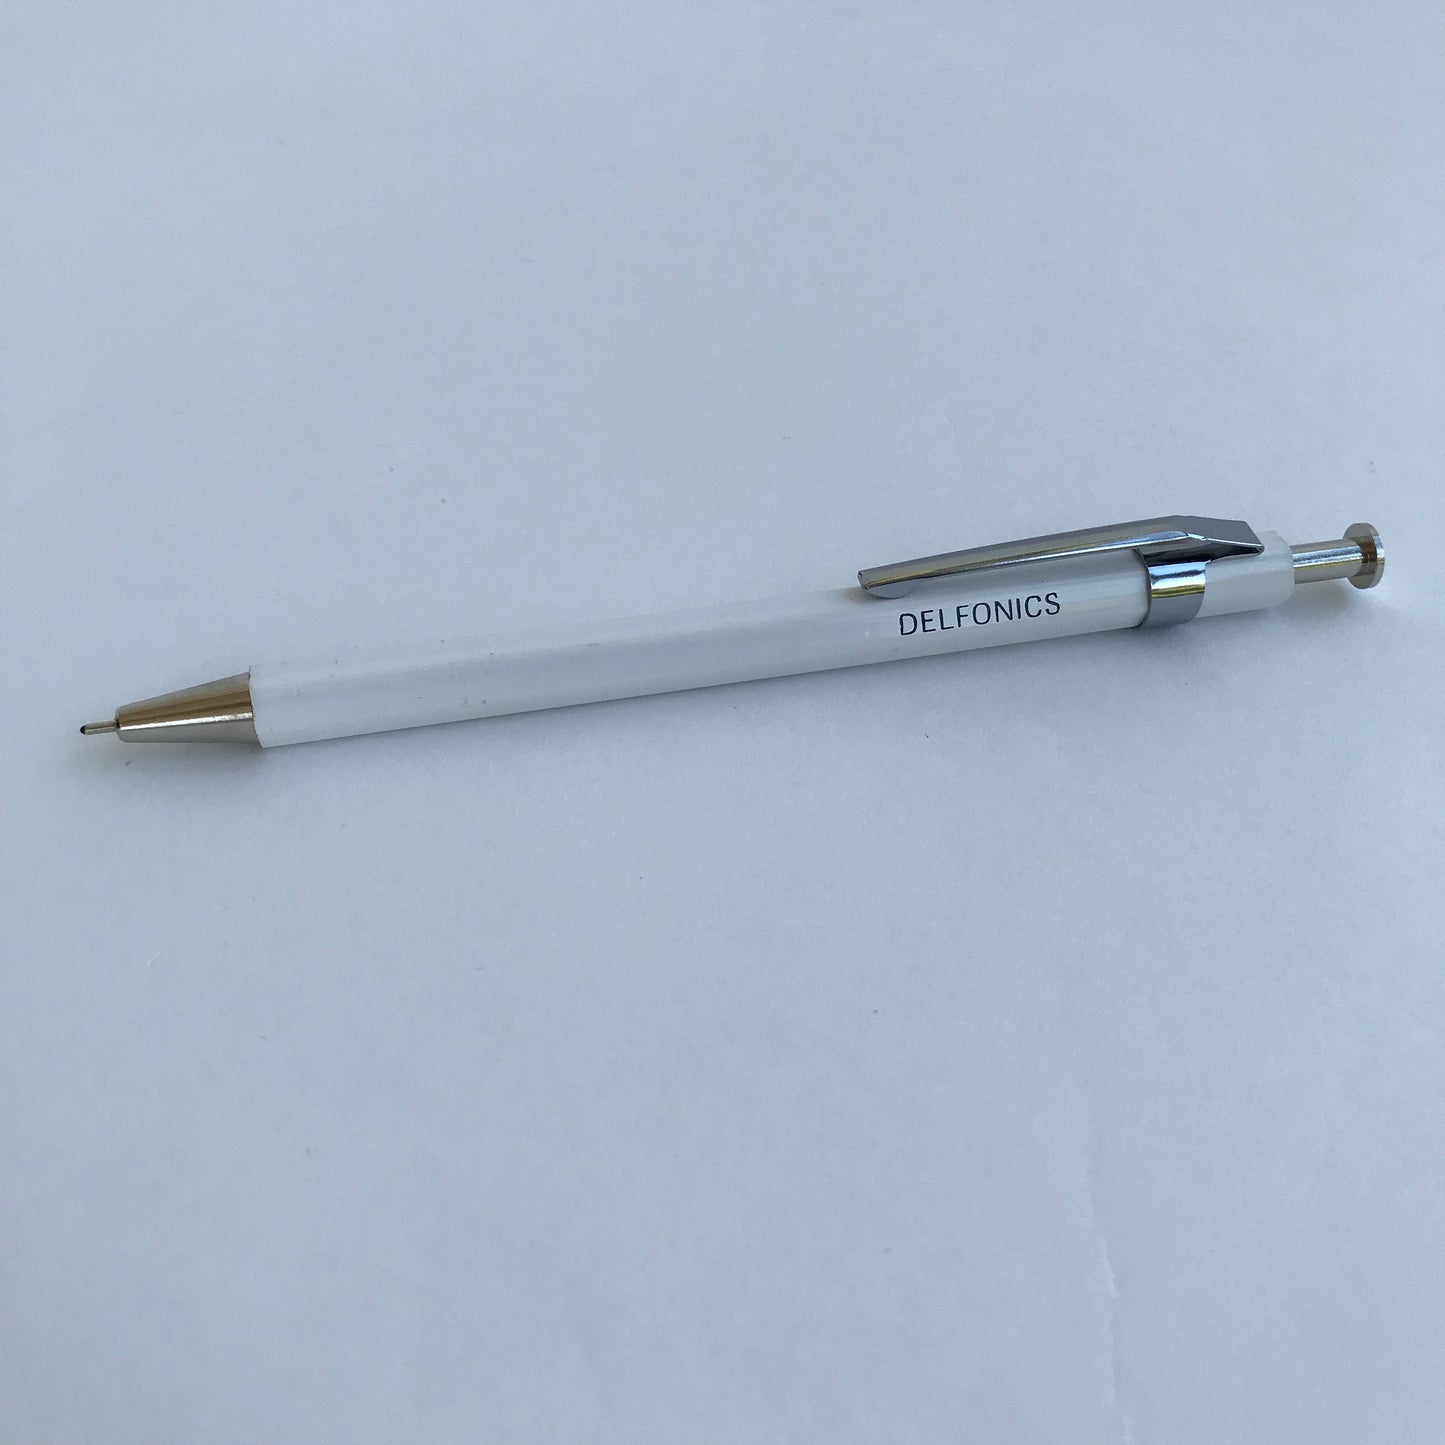 Delfonics Mini Wood Ball Pen